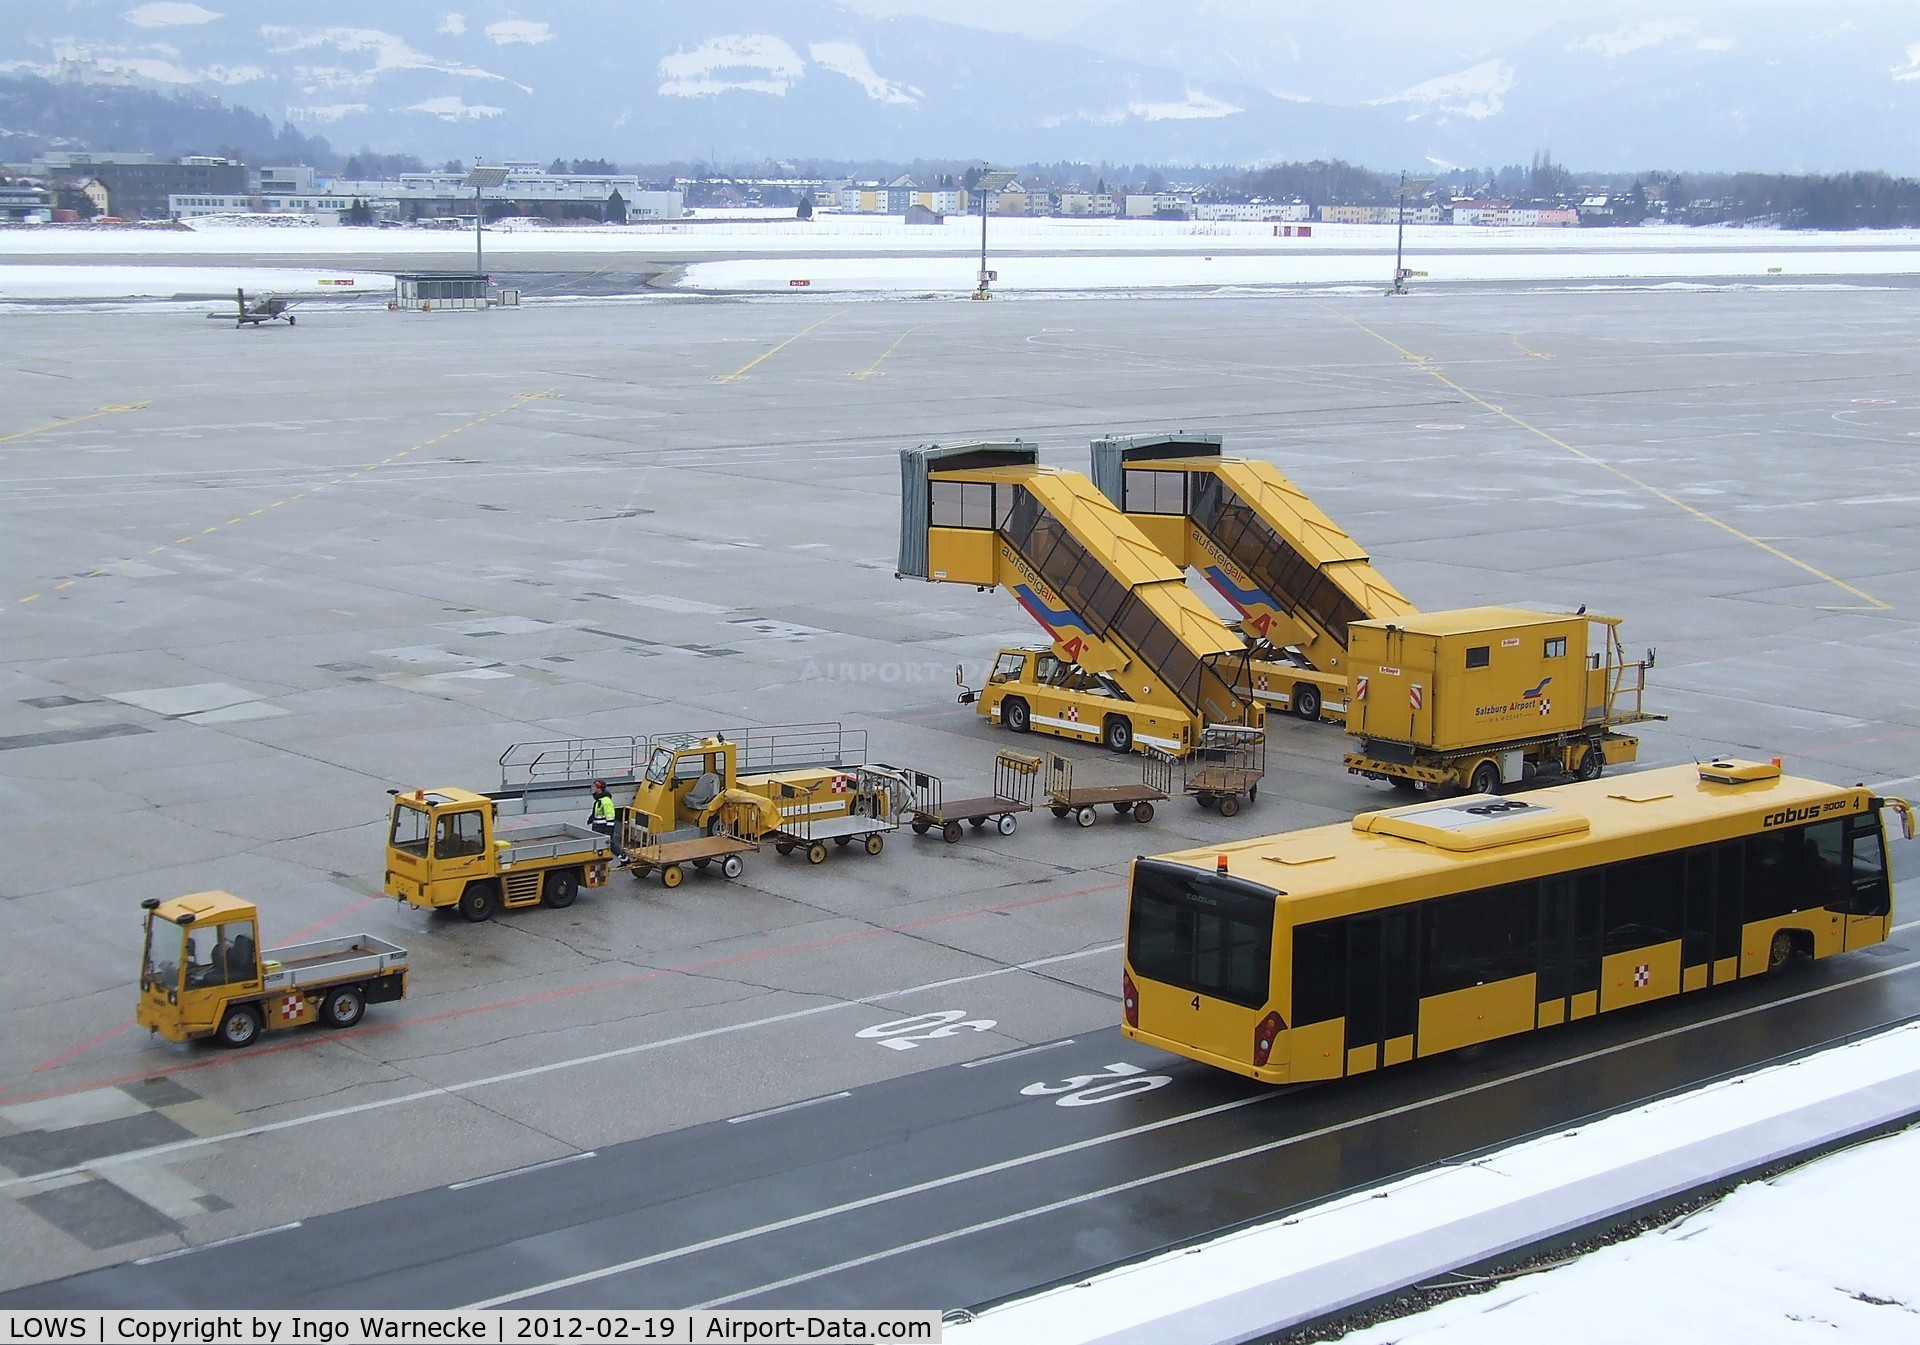 Salzburg Airport, Salzburg Austria (LOWS) - apron at Salzburg W.A.Mozart airport